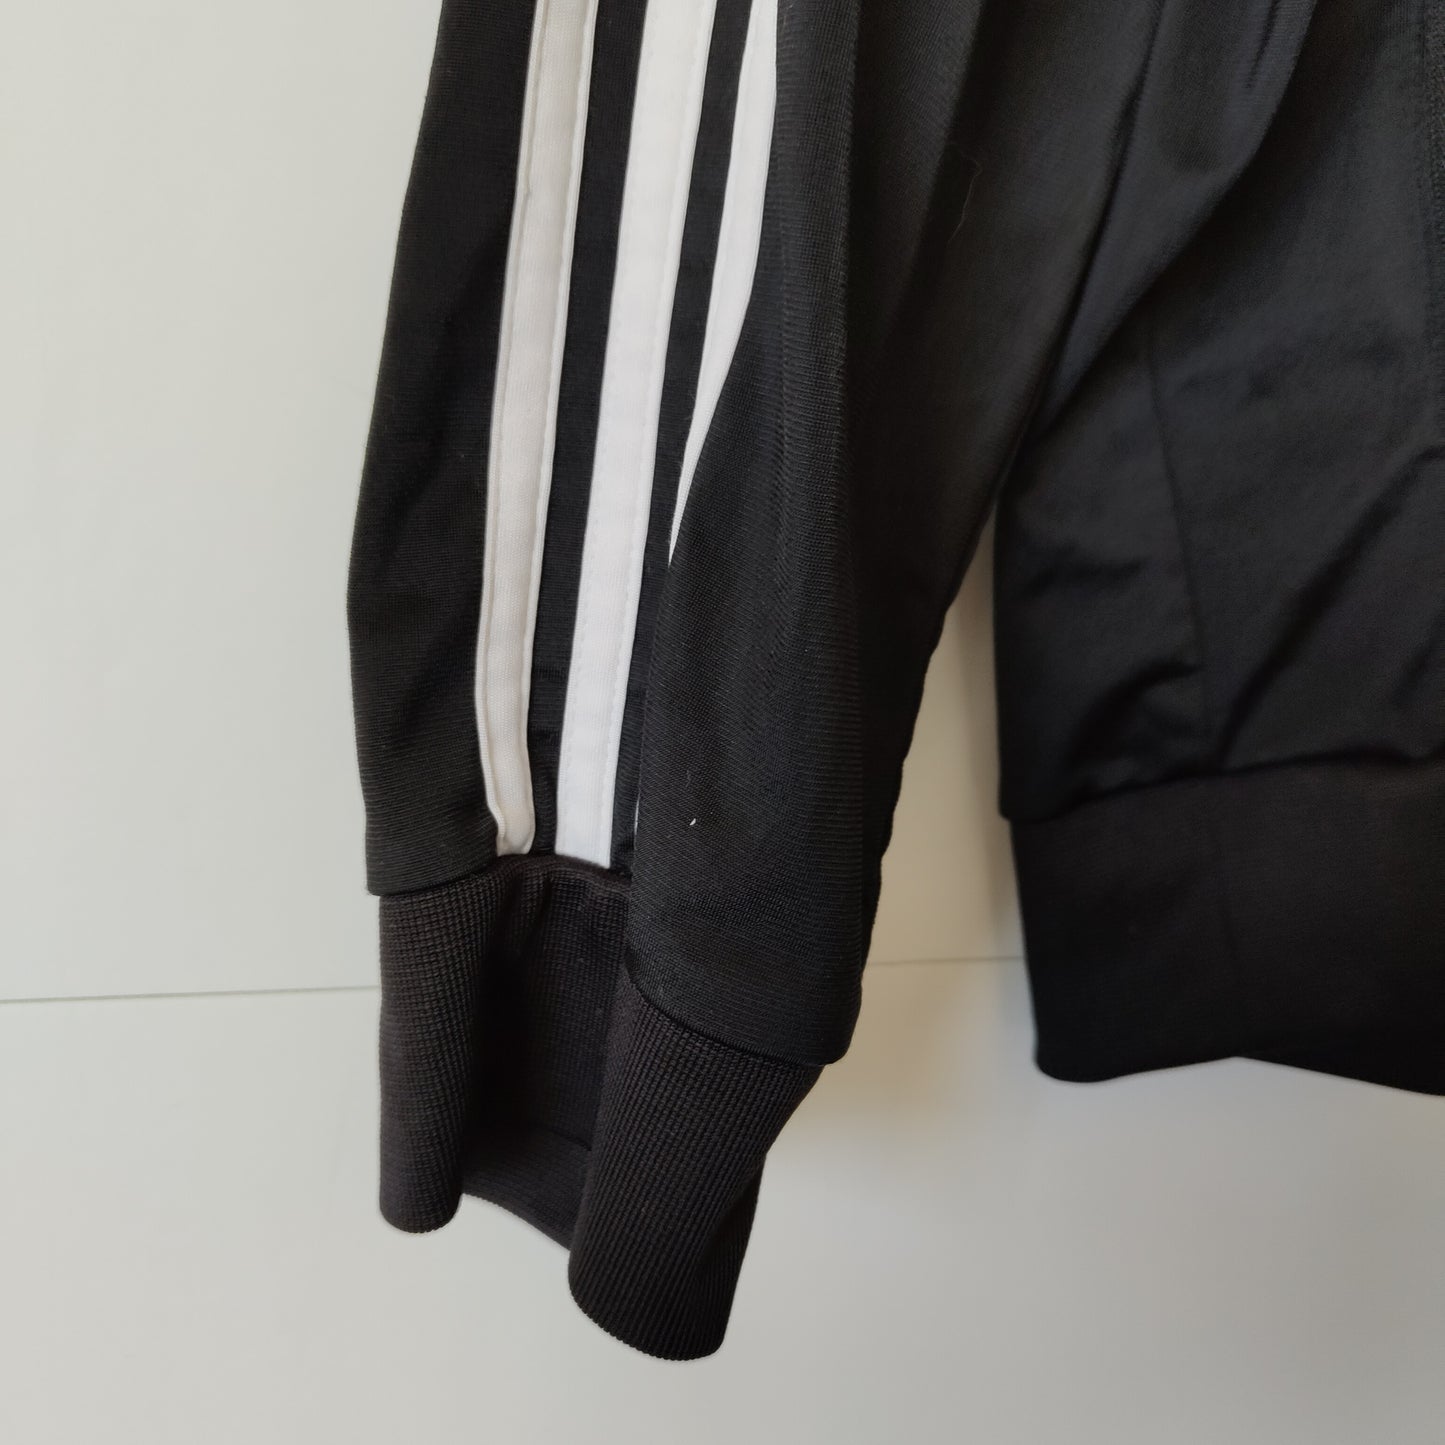 [adidas] track jacket